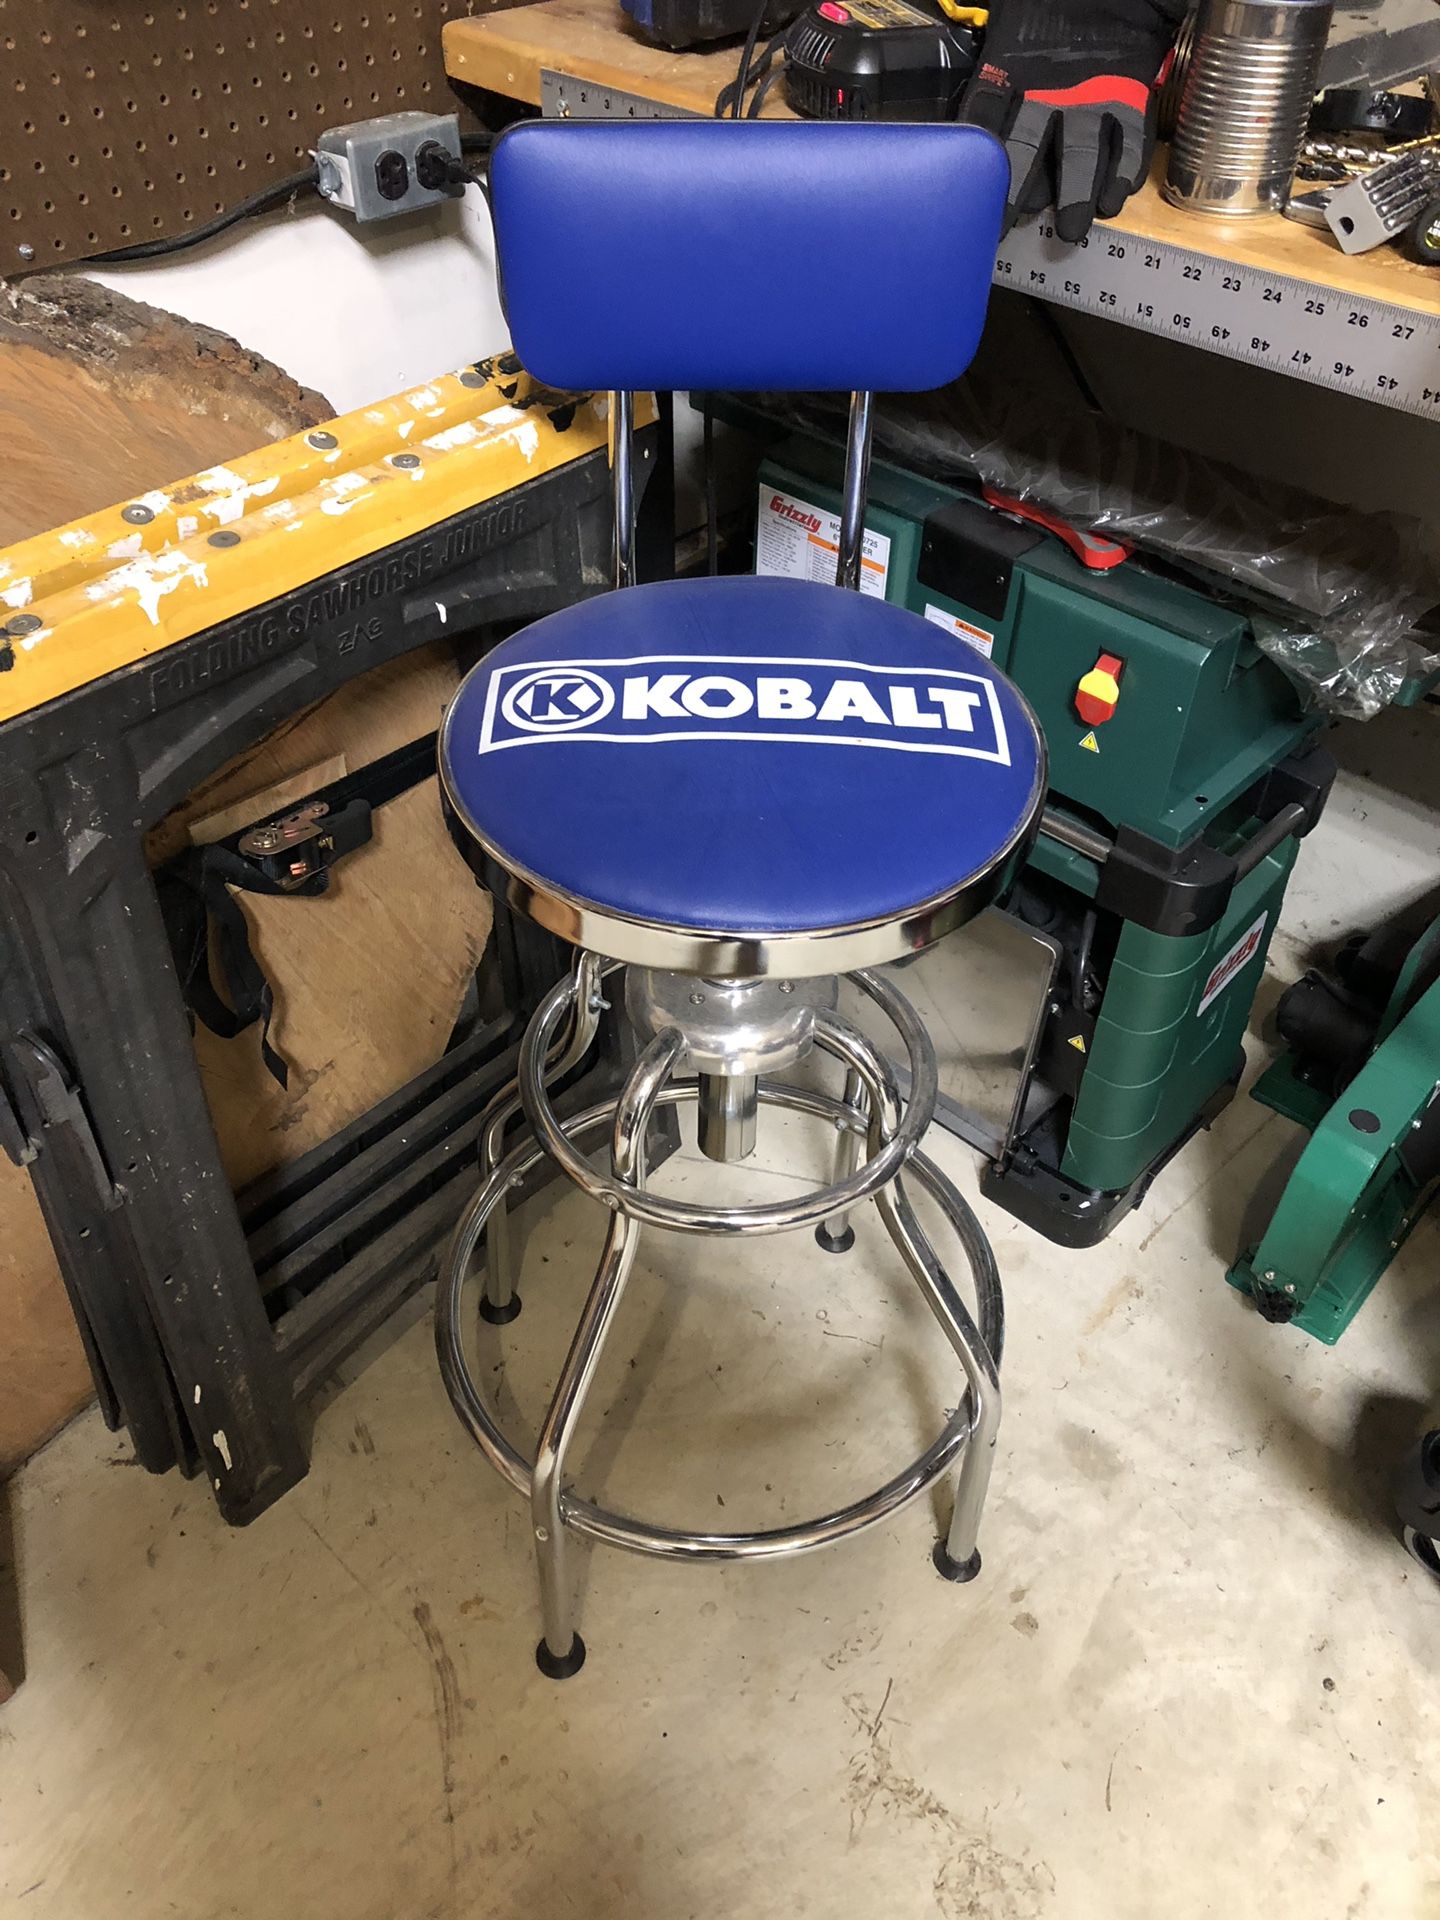 Kobalt stool